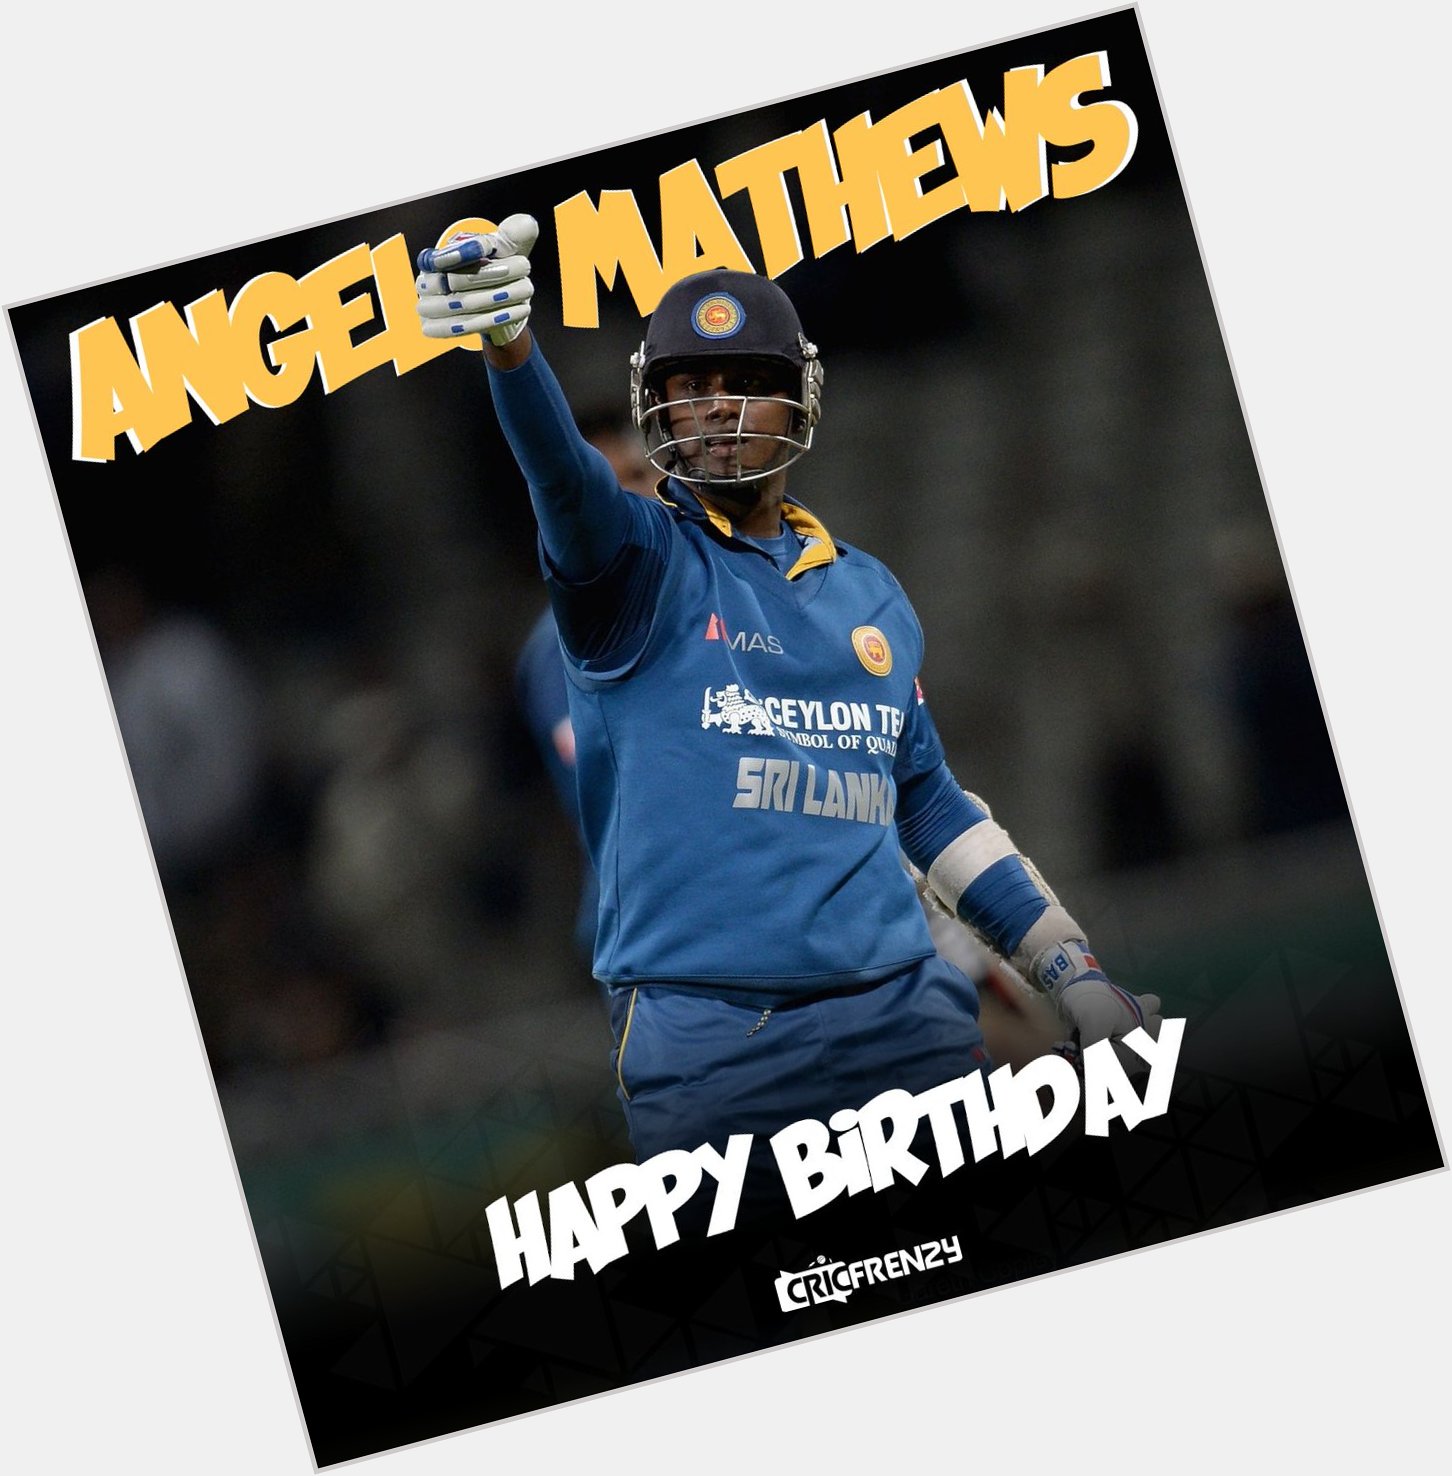 2014 ICC World Twenty20 winner
Happy birthday Angelo Mathews    